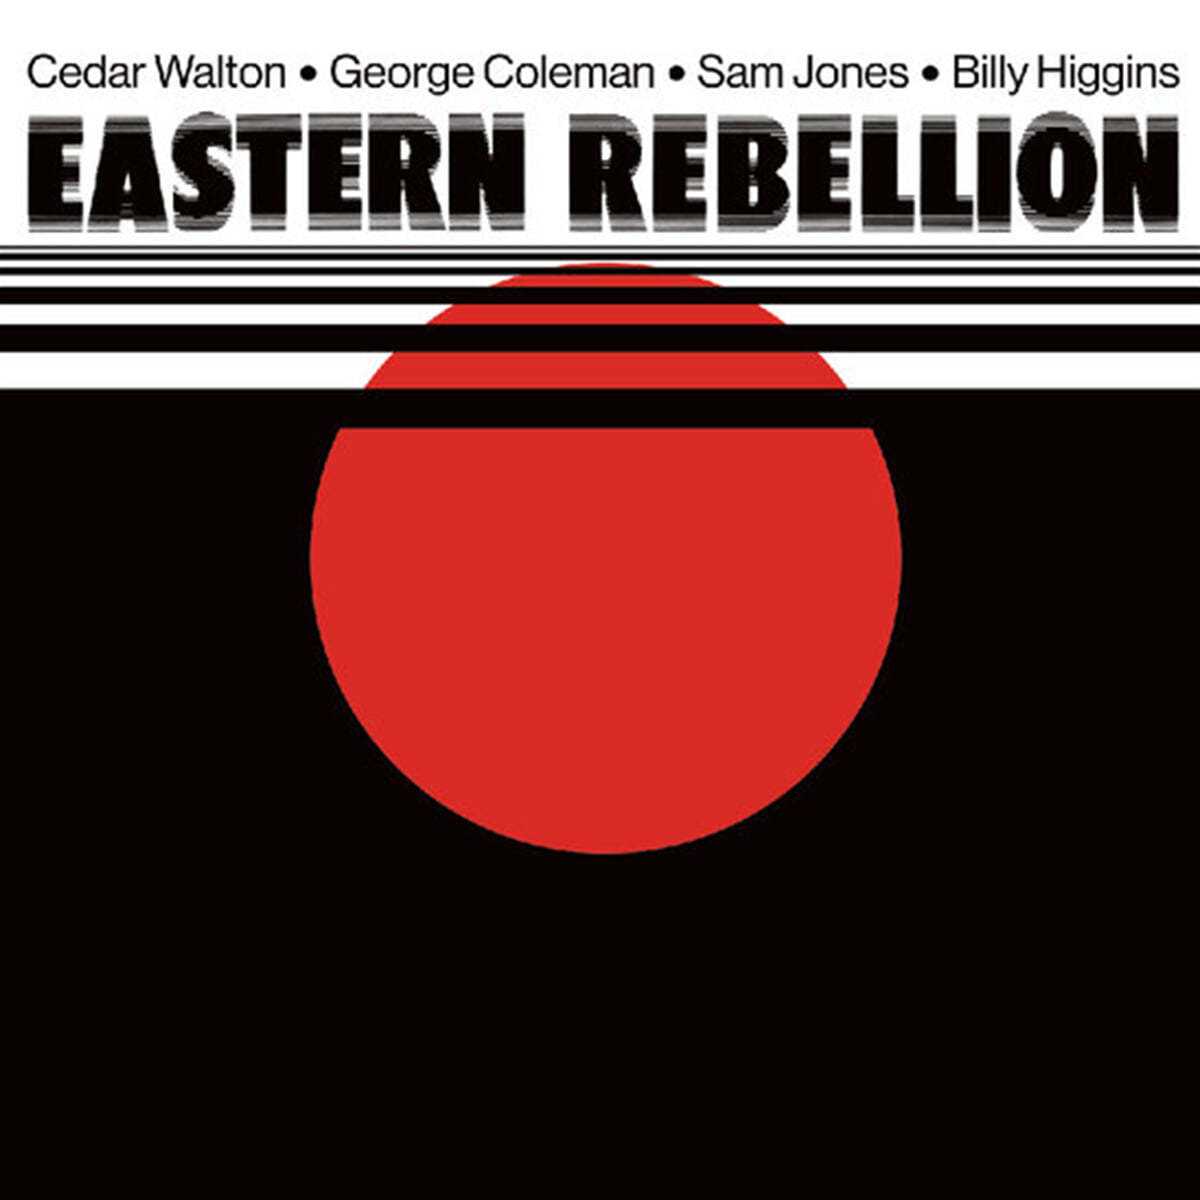 George Coleman / Cedar Walton / Sam Jones / Billy Higgins (조지 콜맨 / 시다 월튼 / 샘 존스 / 빌리 히긴스) - Eastern Rebellion [투명 컬러 LP] 